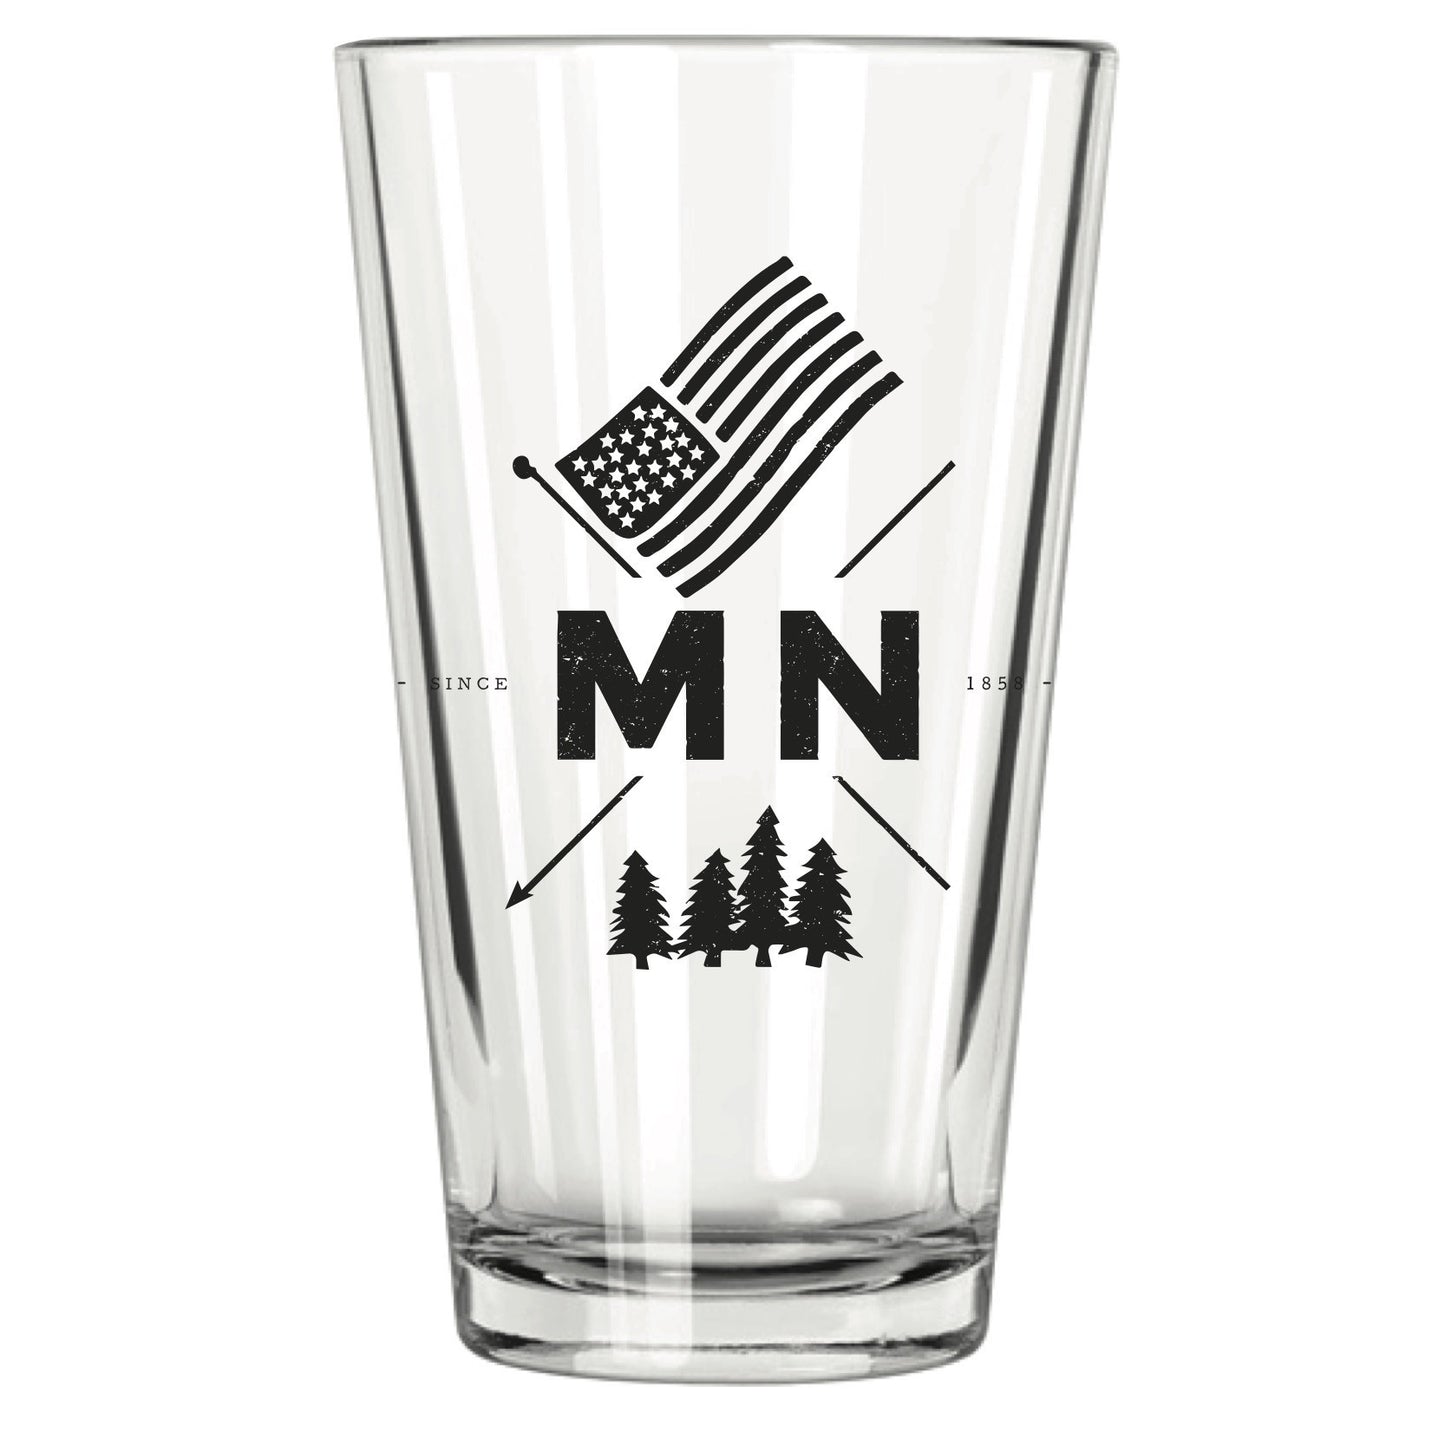 MN Crest Pint Glass - Northern Glasses Pint Glass